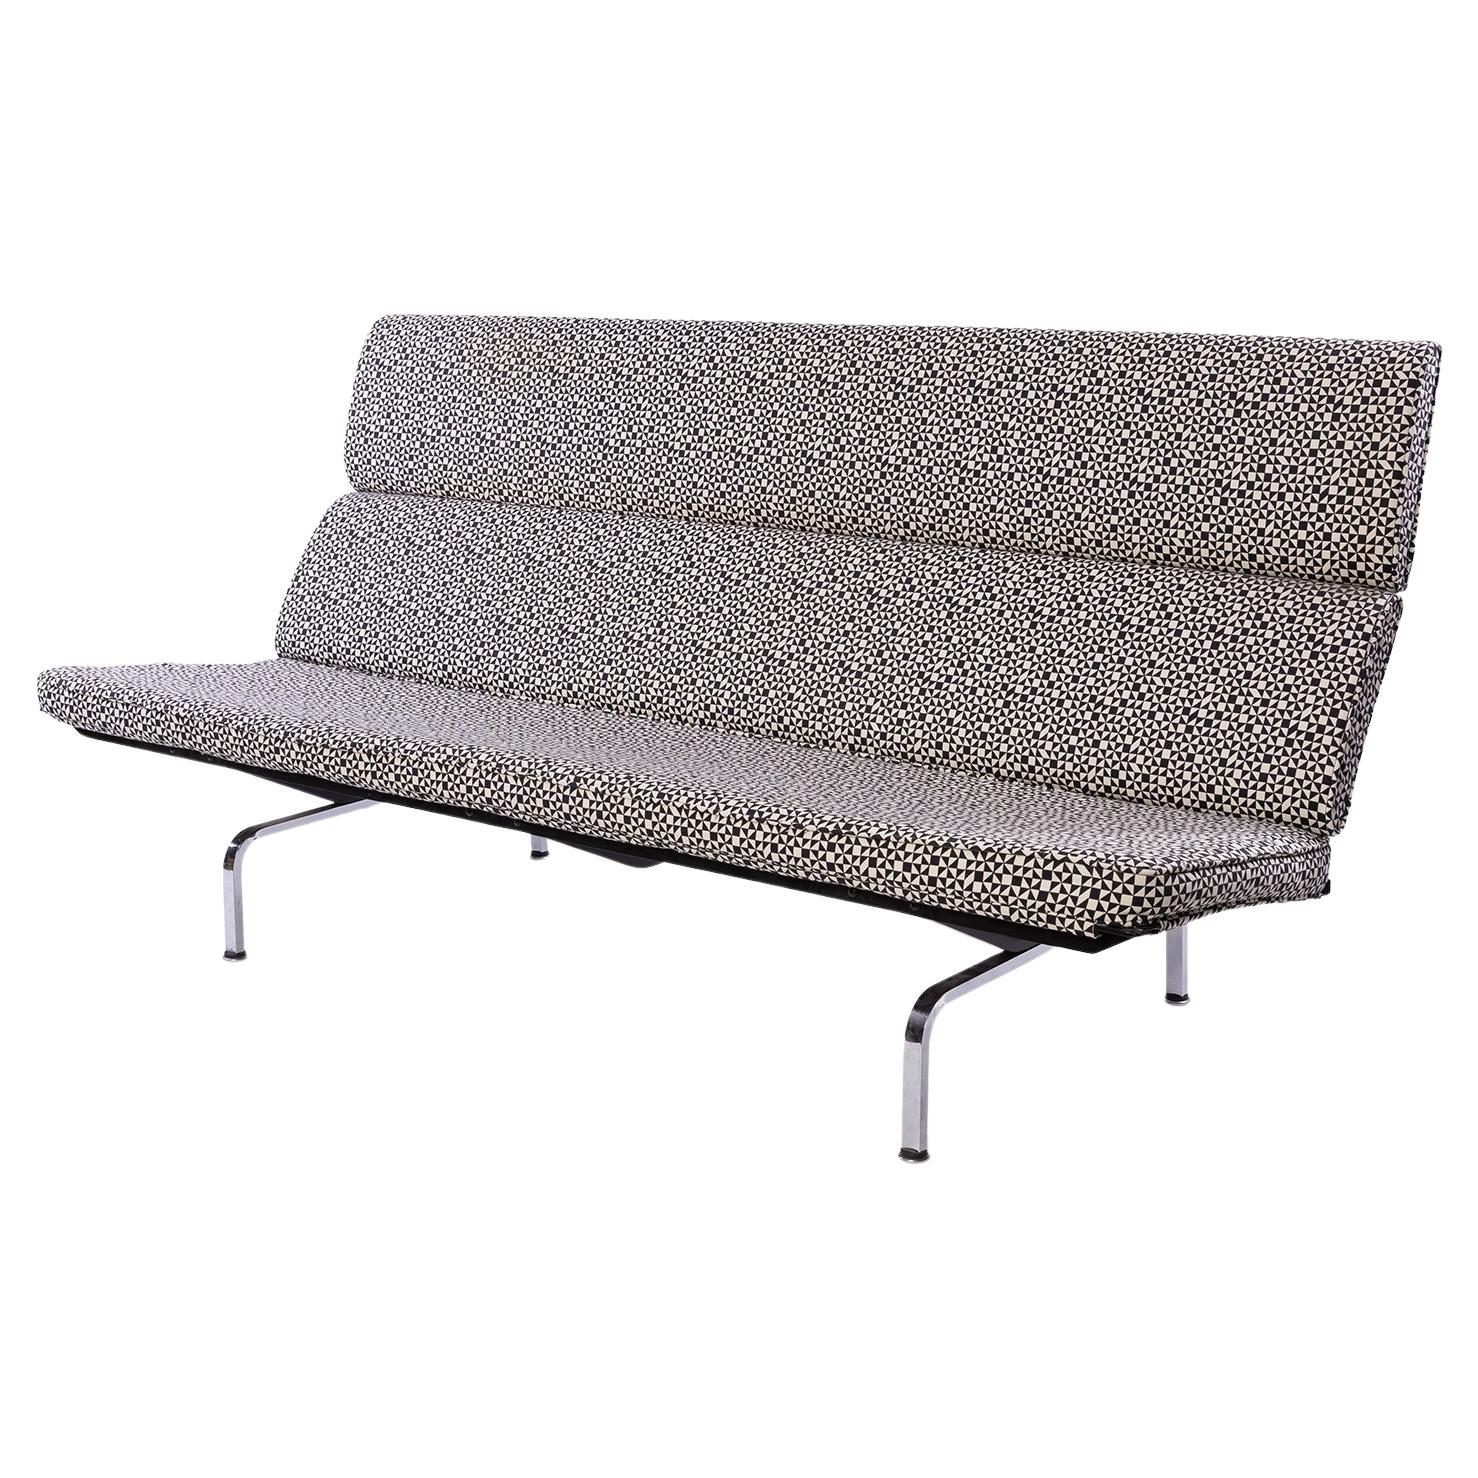 Eames Herman Miller Compact Sofa with Alexander Girard Fabric